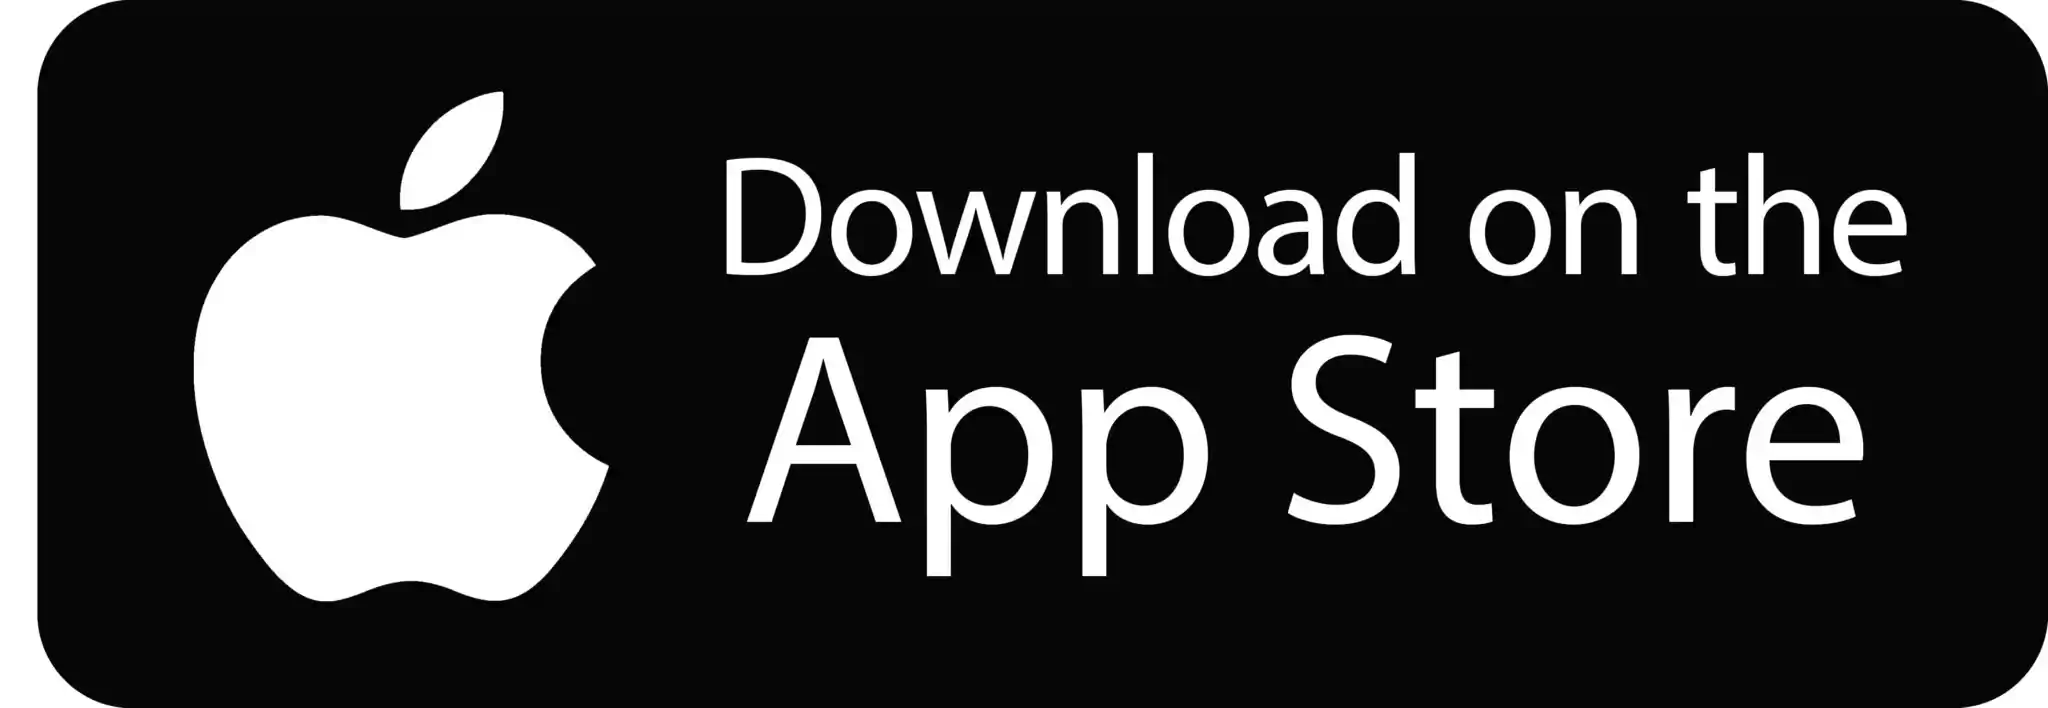 Apple app store download button